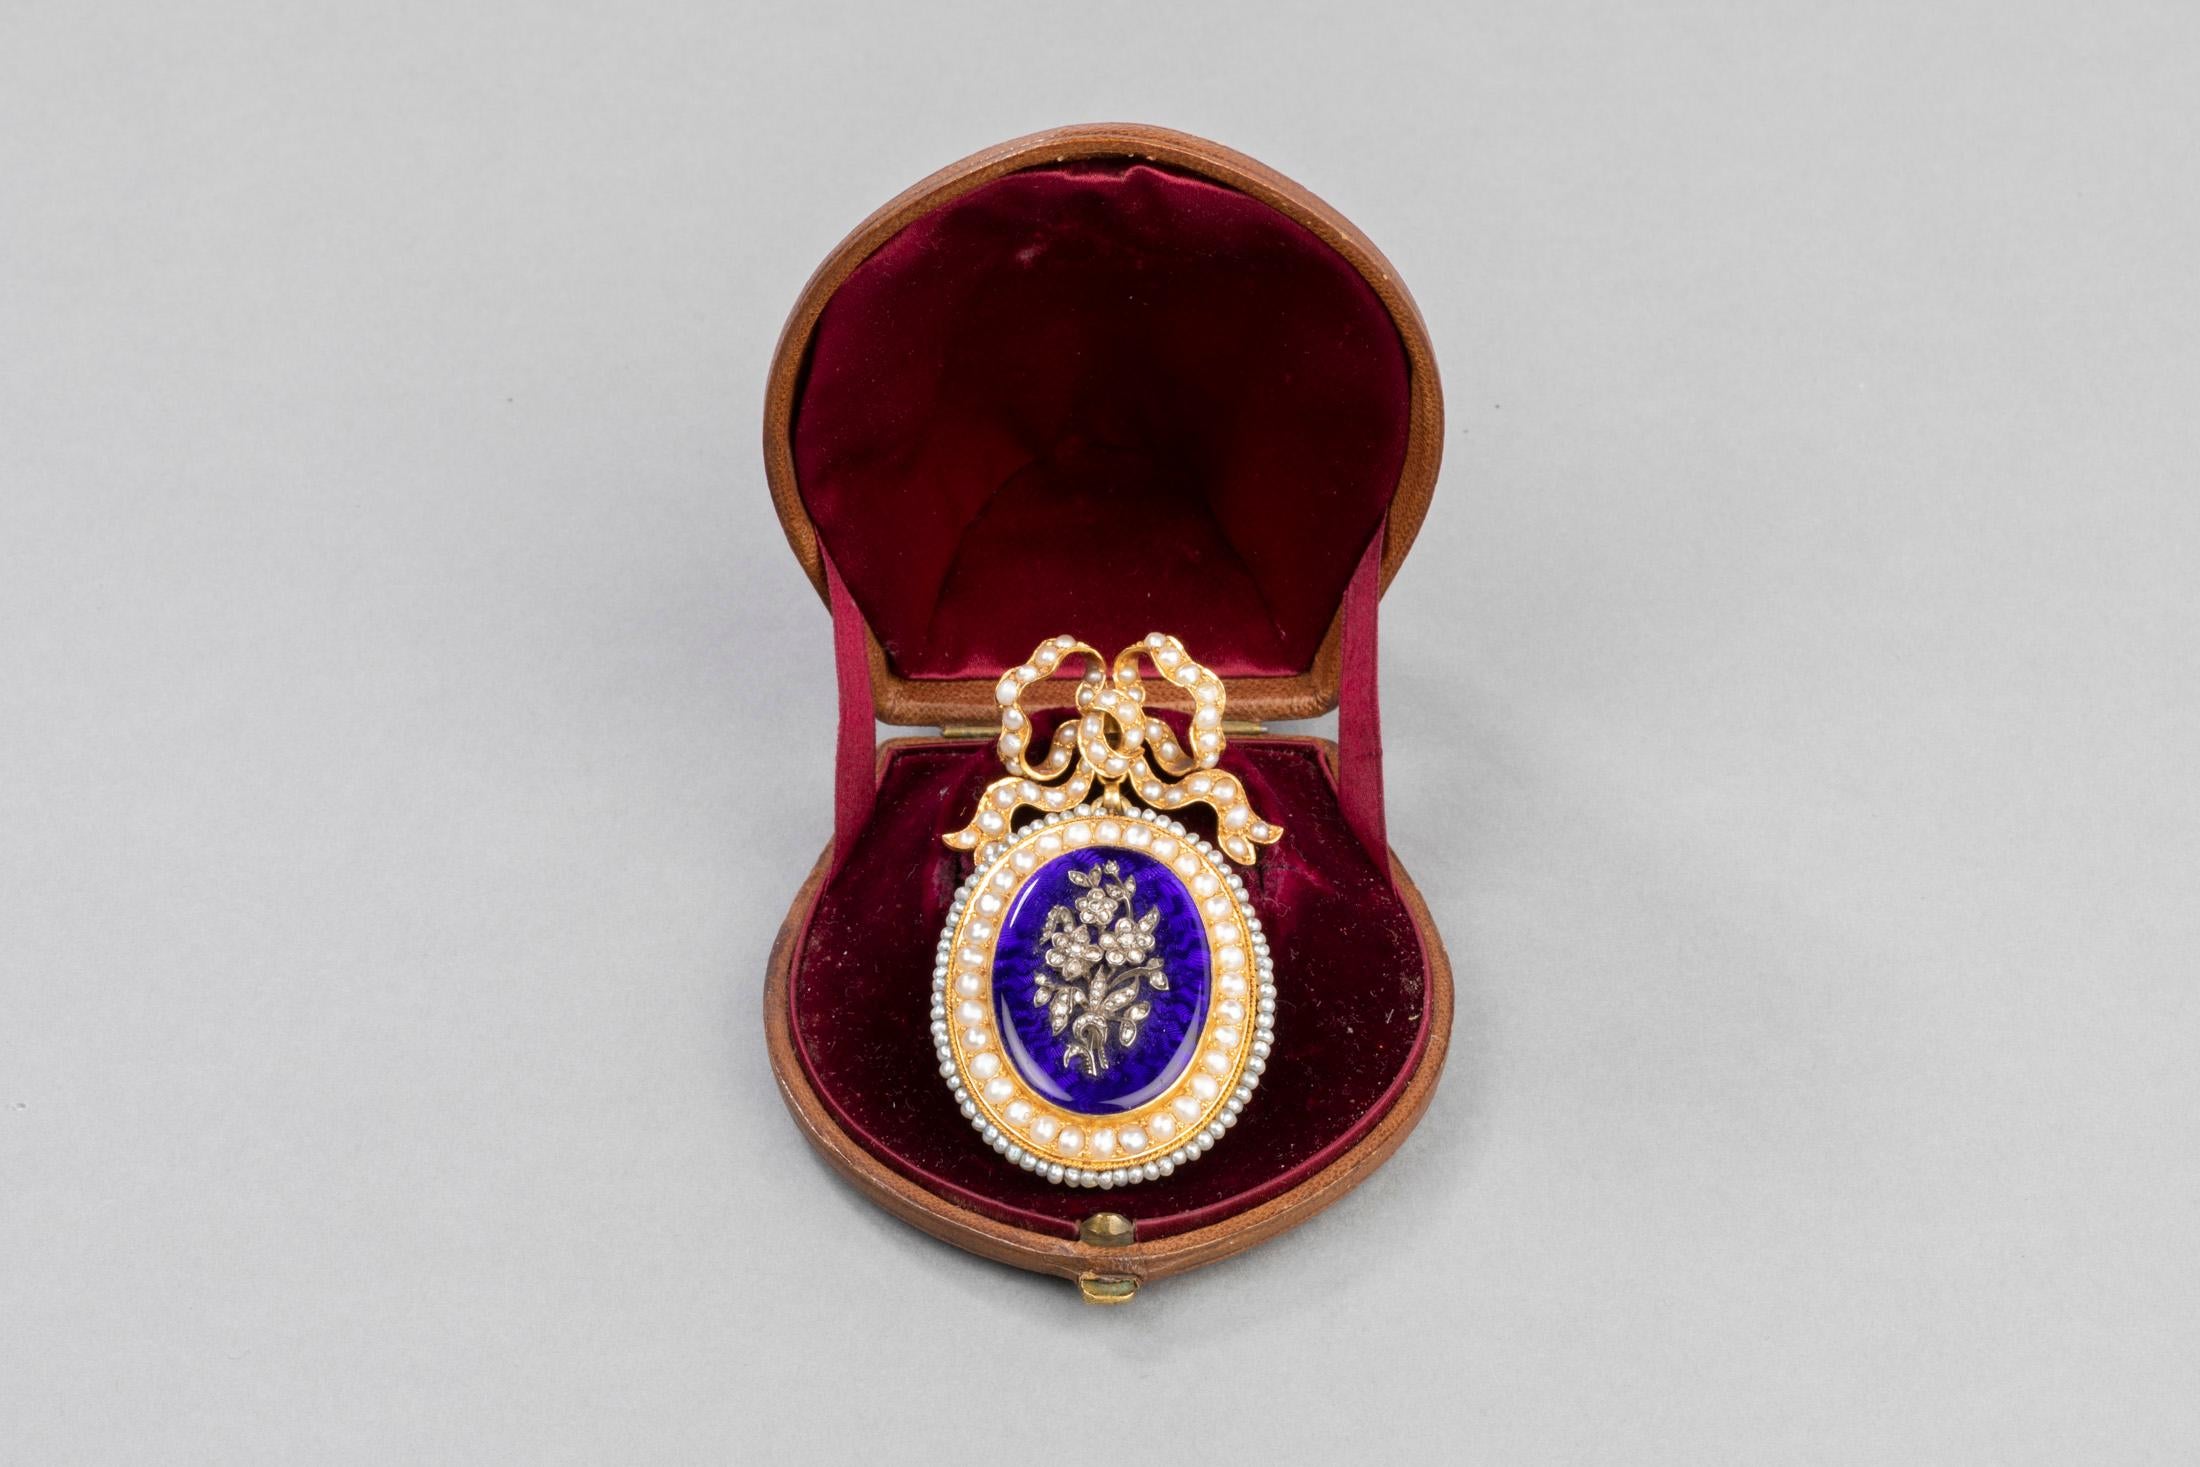 Women's Antique Napoleon III Locket, Gold Enamel and Pearls